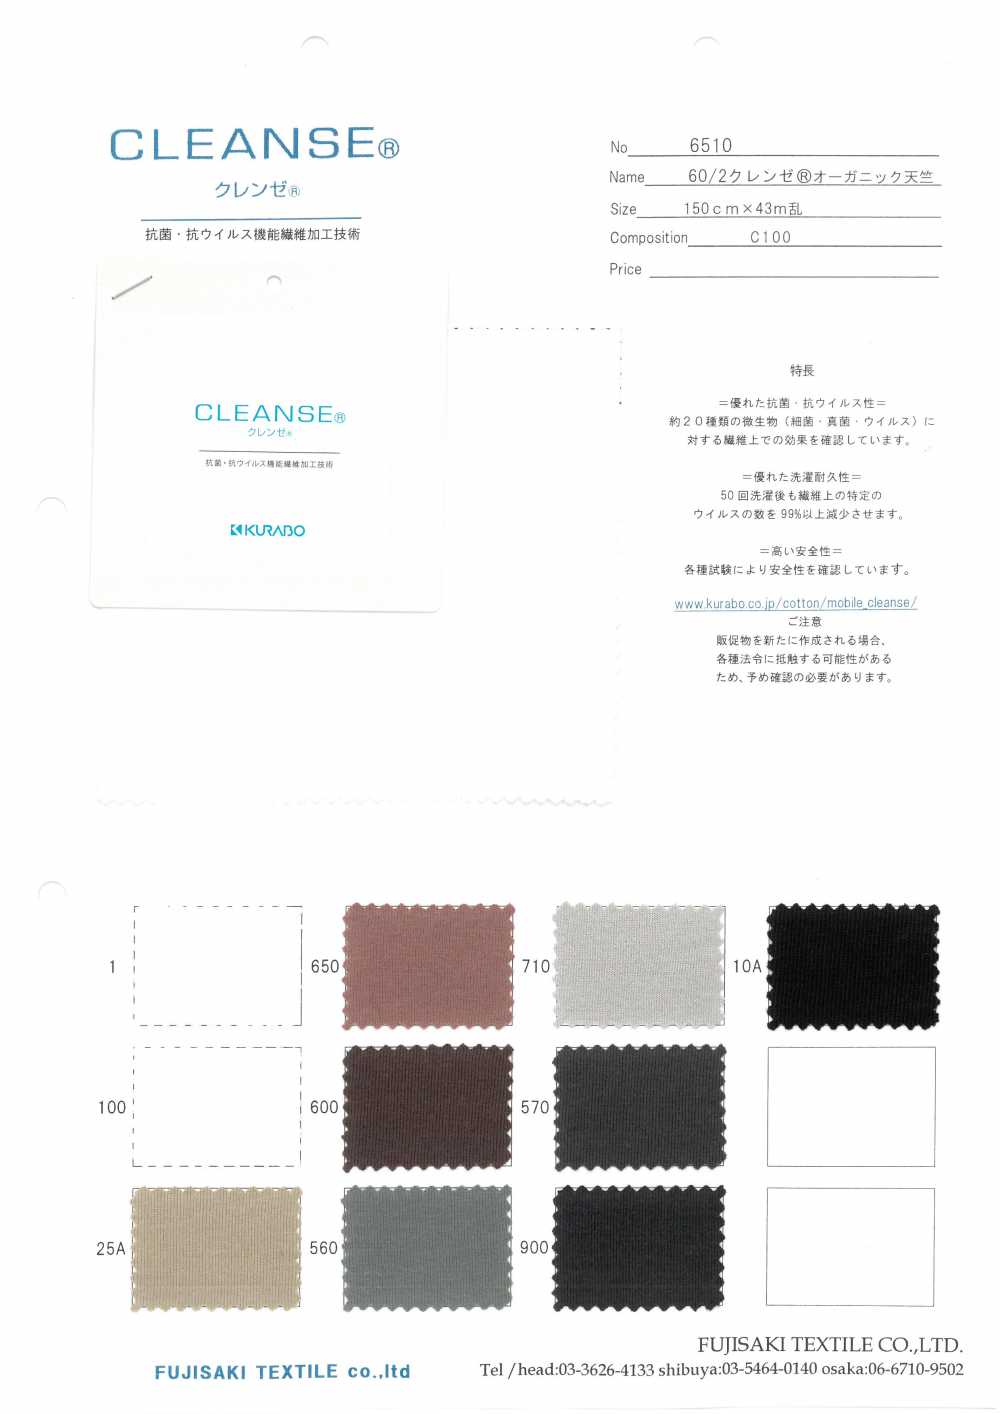 6510 CLEANSE& # 174; Organic Tianzhu Cotton[Textile / Fabric] Fujisaki Textile